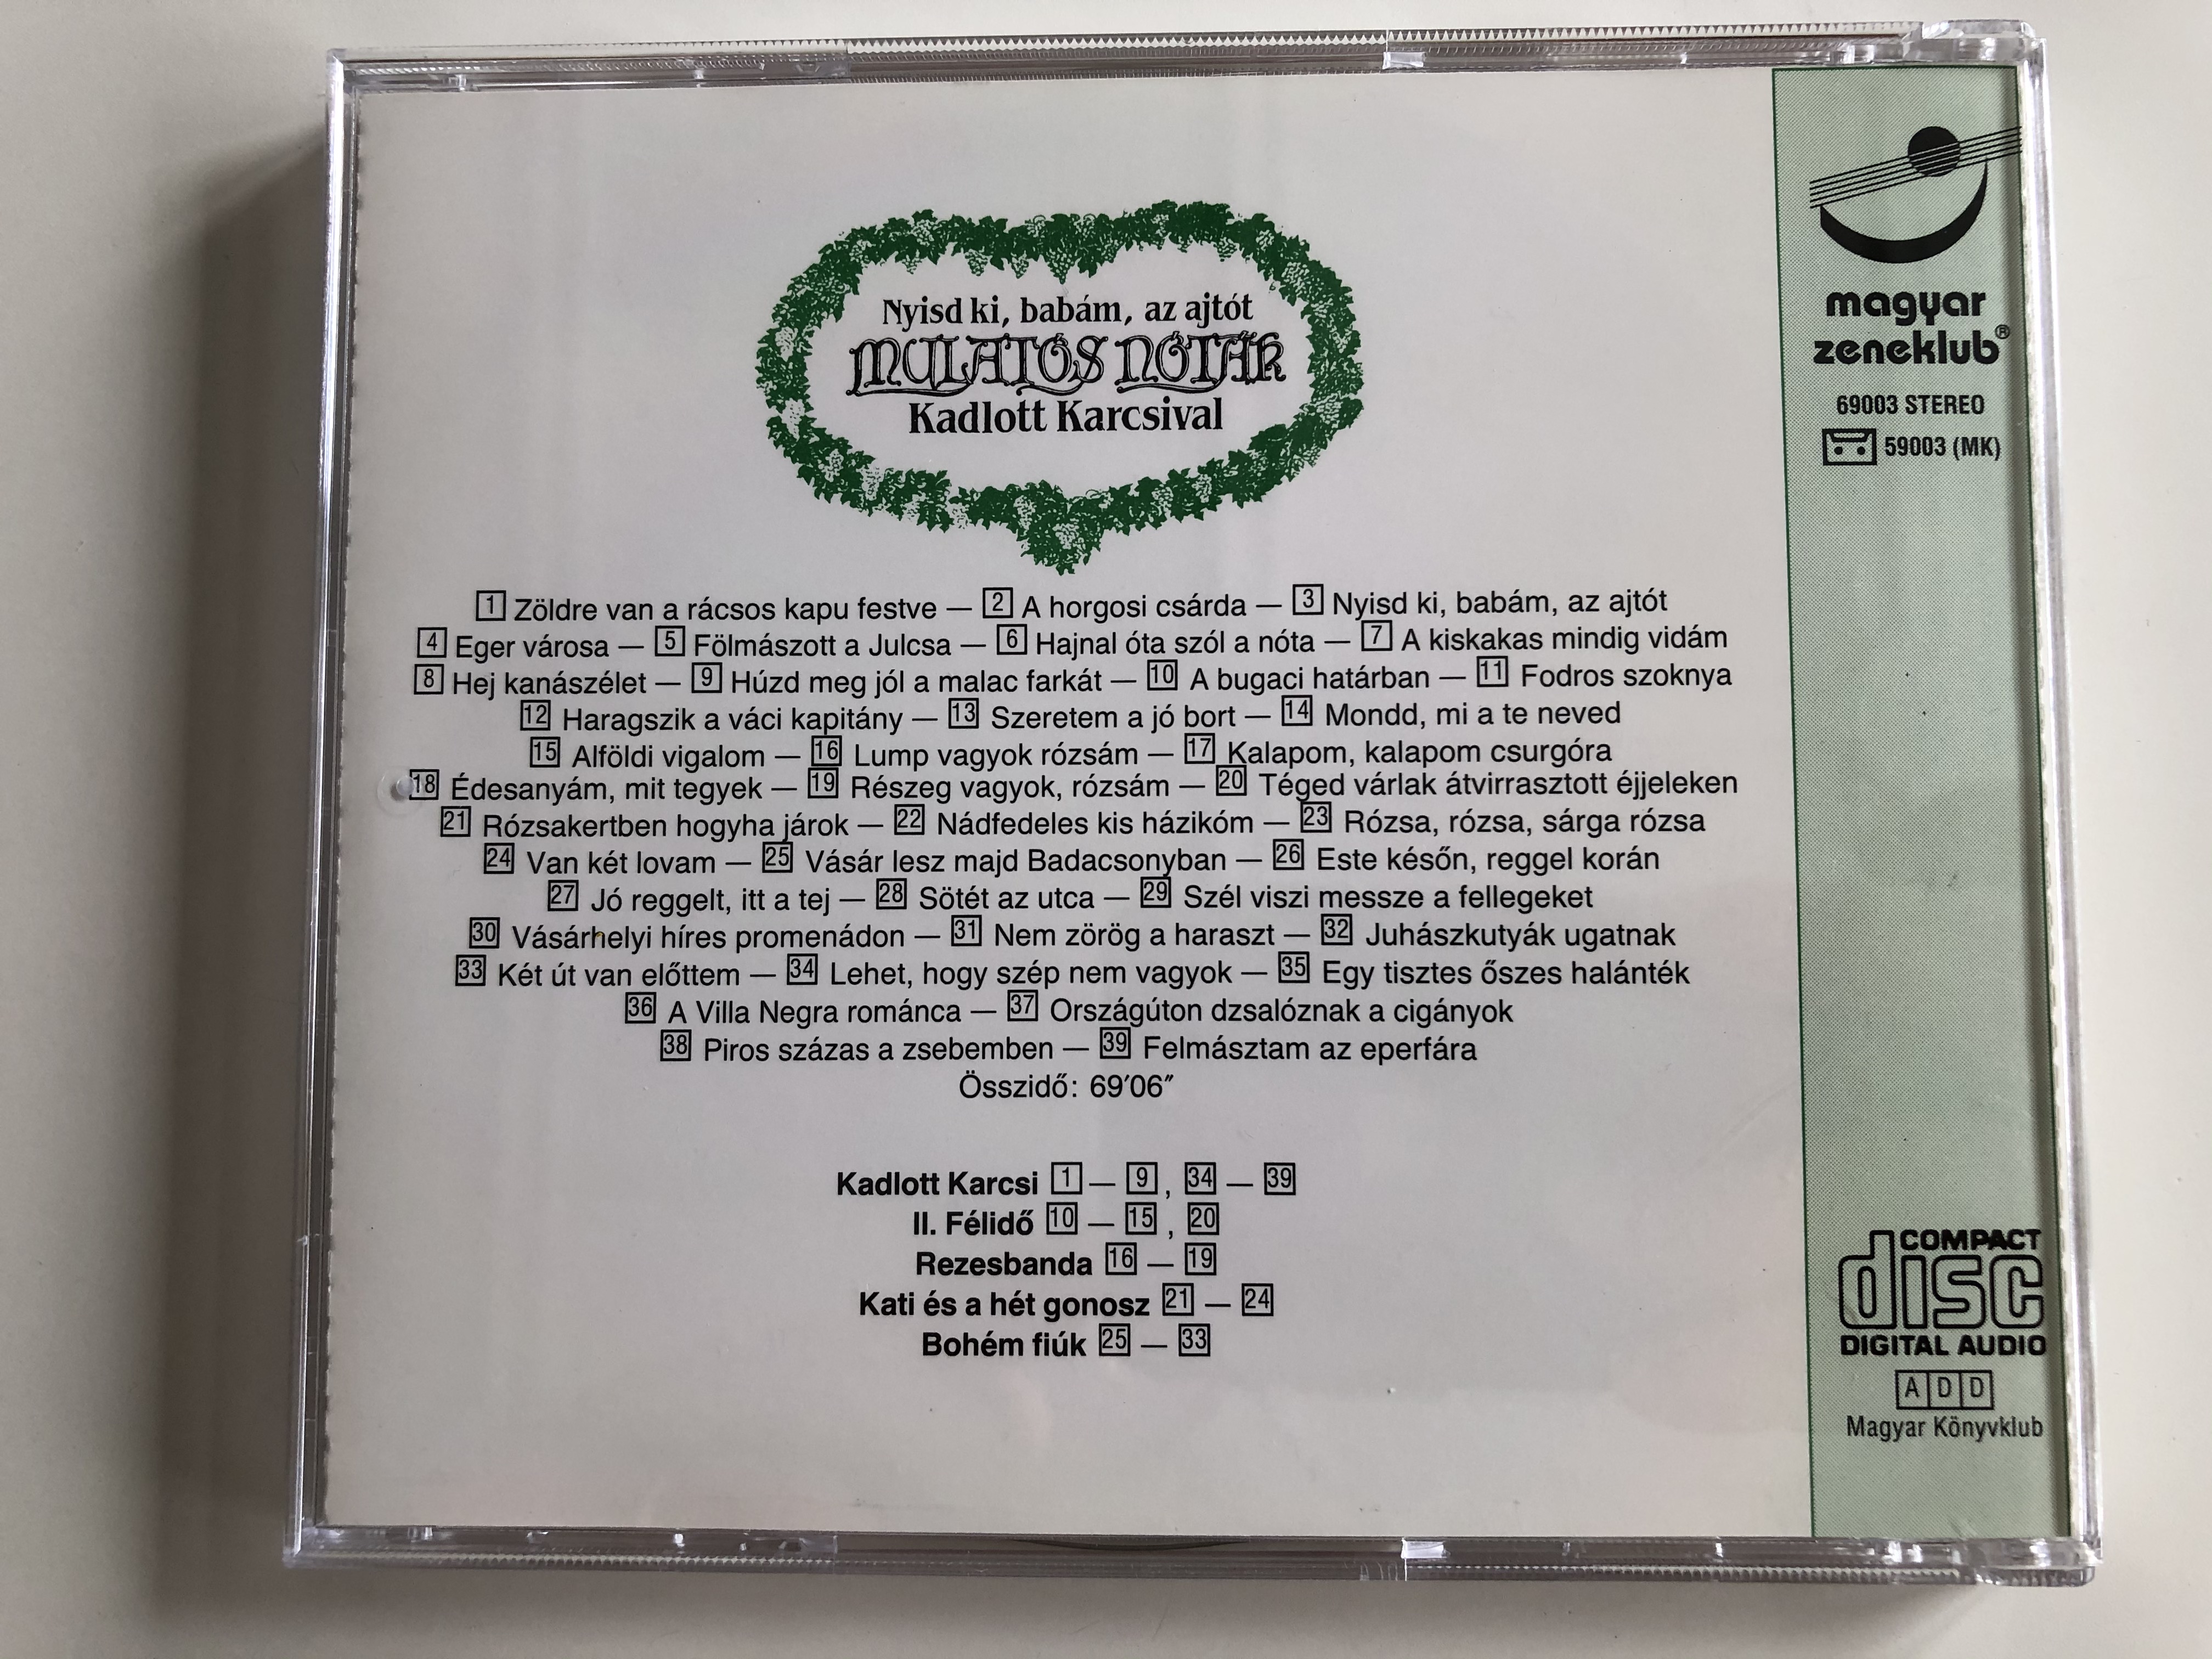 nyisd-ki-bab-m-az-ajt-t-mulat-s-n-t-k-kadlott-karcsival-magyar-k-nyvklub-audio-cd-1994-stereo-69003-5-.jpg